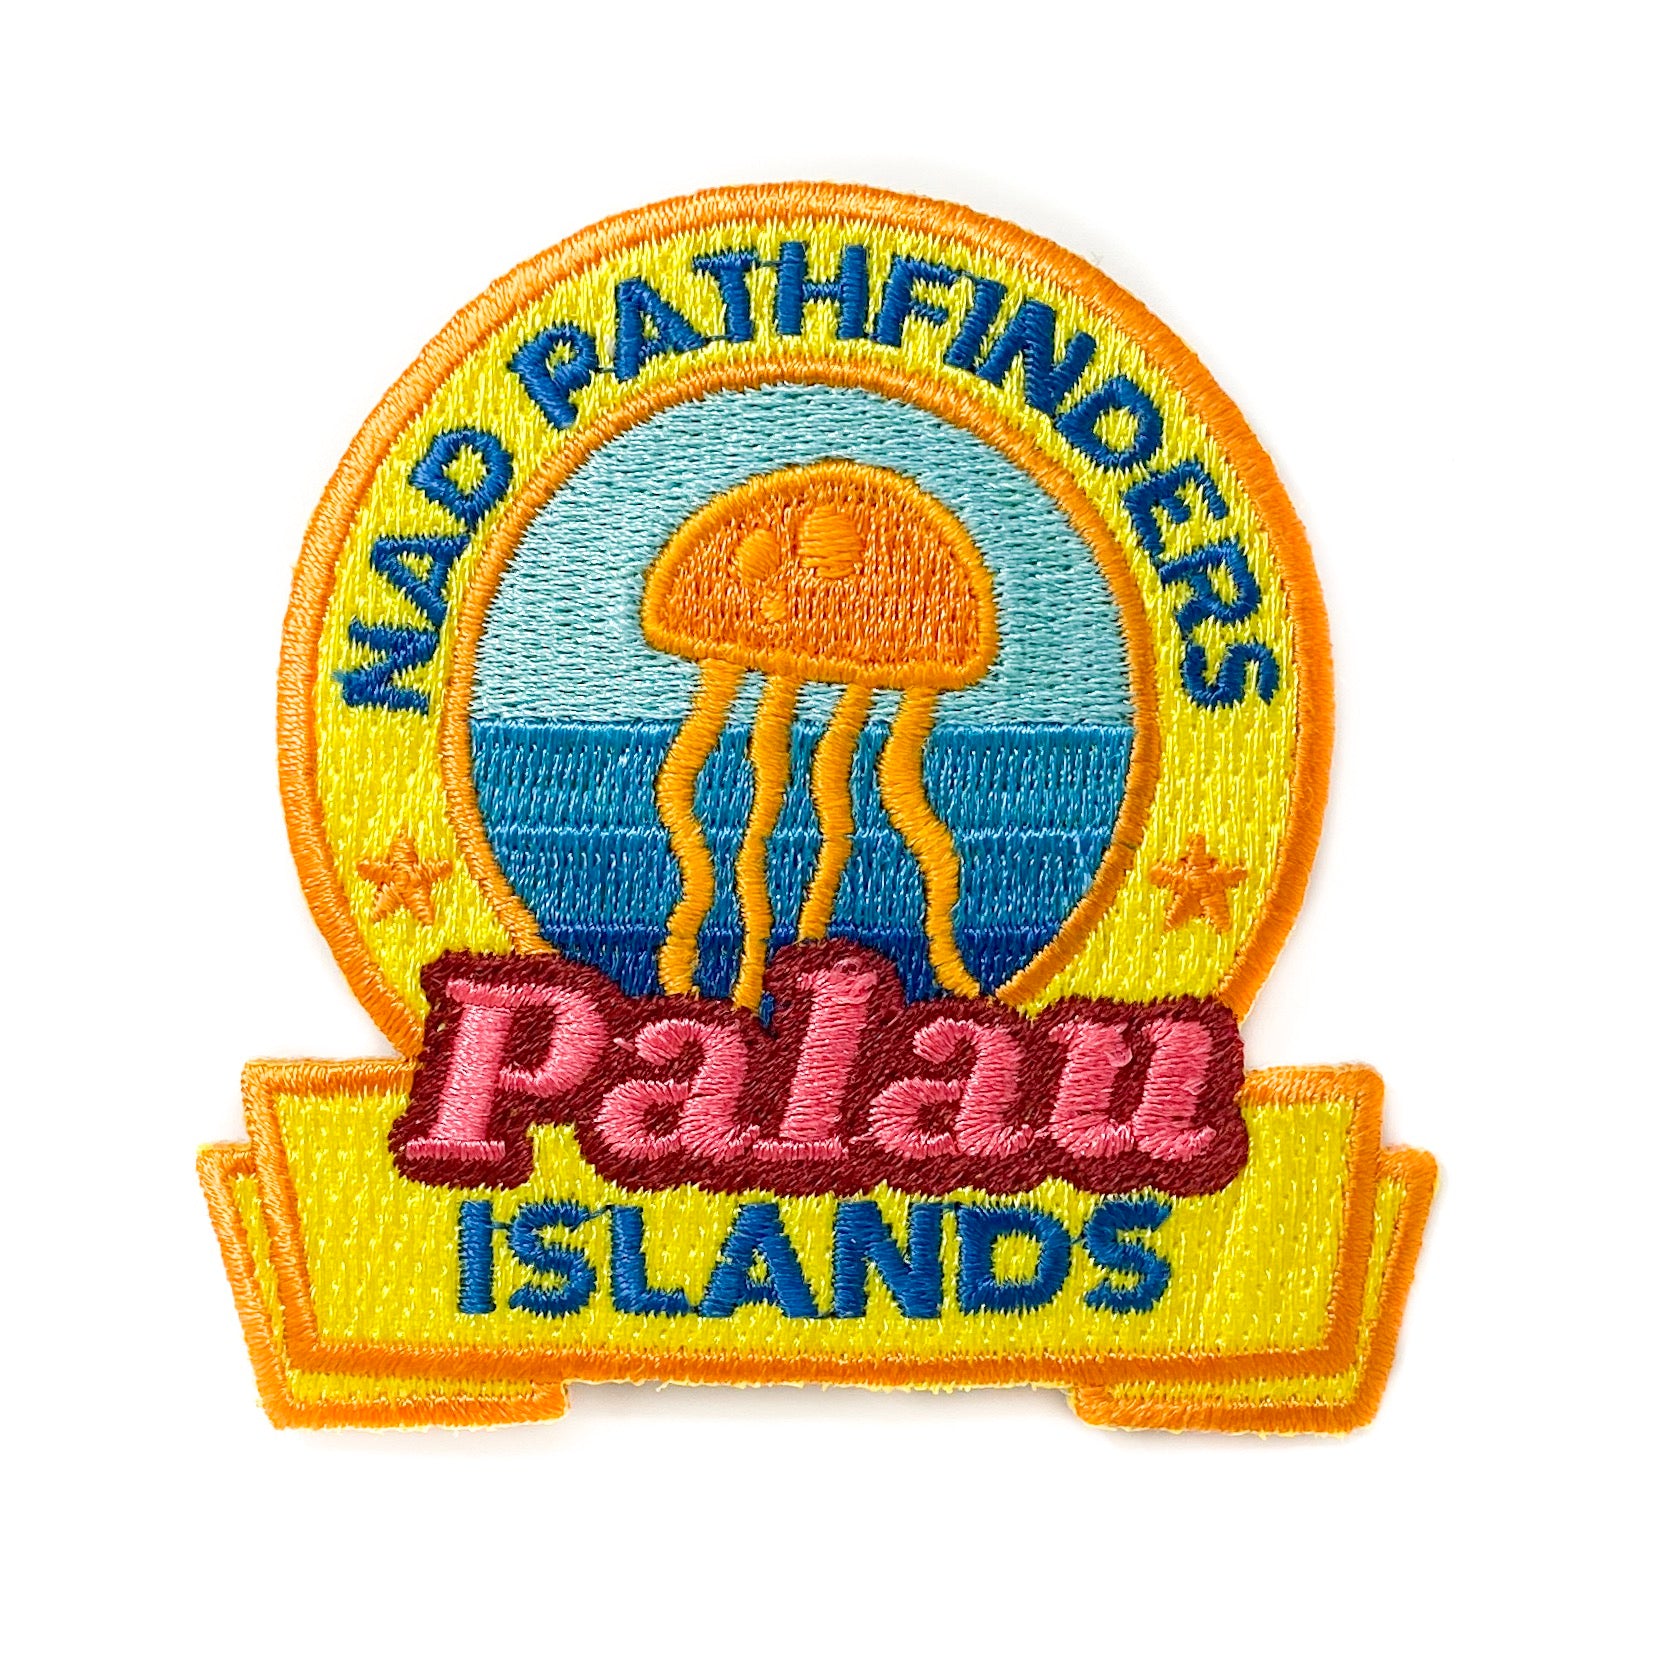 Micronesian Islands Pathfinder Patch (Palau) - Pinfinder Club